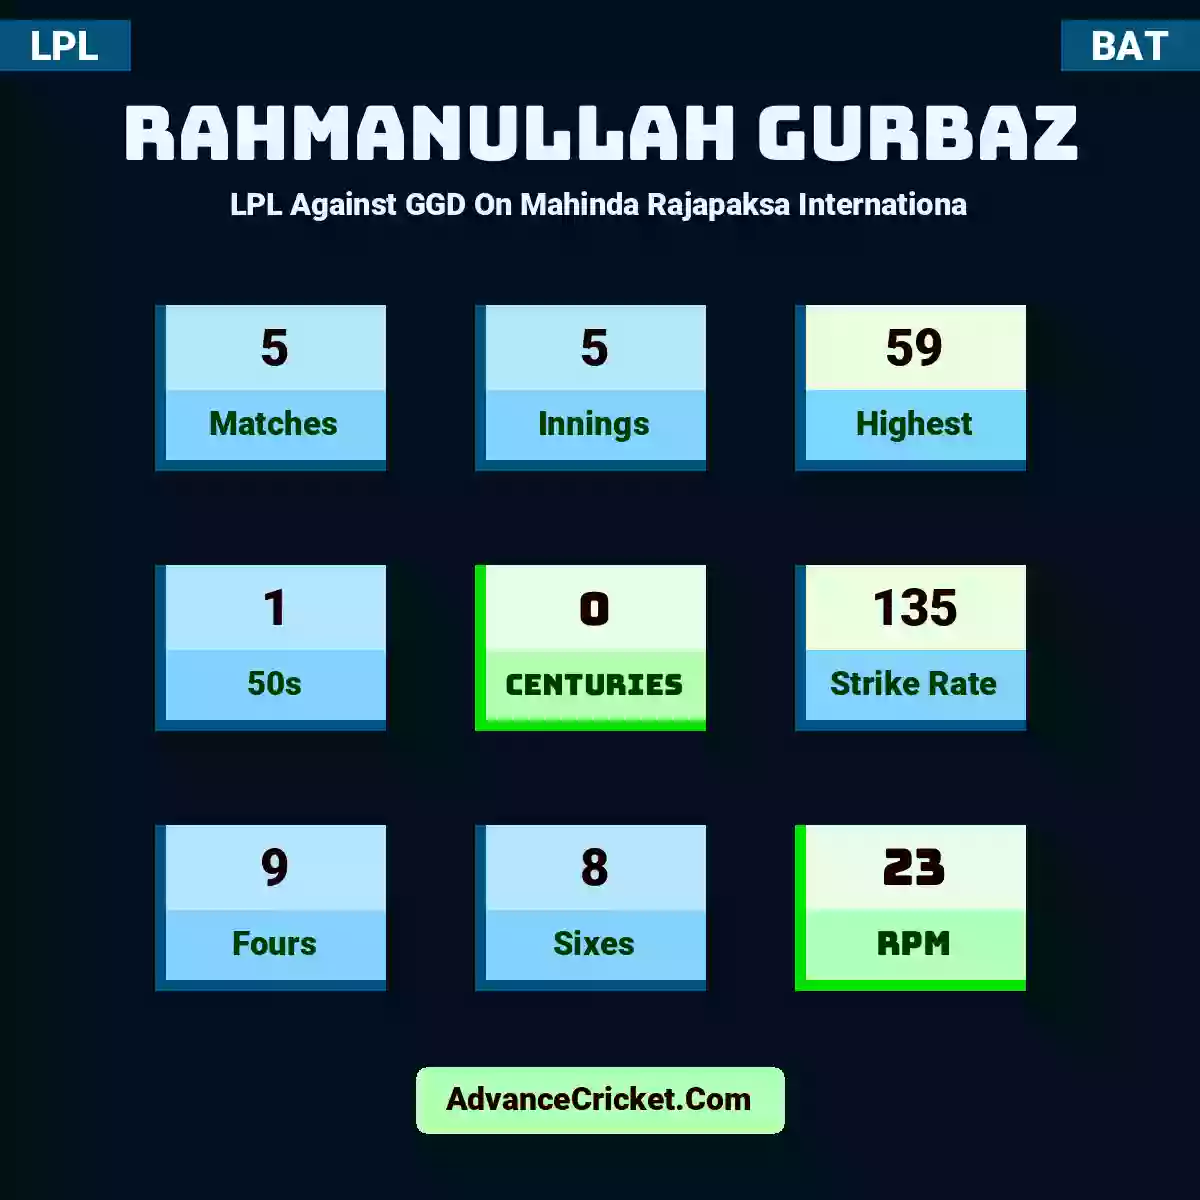 Rahmanullah Gurbaz LPL  Against GGD On Mahinda Rajapaksa Internationa, Rahmanullah Gurbaz played 5 matches, scored 59 runs as highest, 1 half-centuries, and 0 centuries, with a strike rate of 135. R.Gurbaz hit 9 fours and 8 sixes, with an RPM of 23.